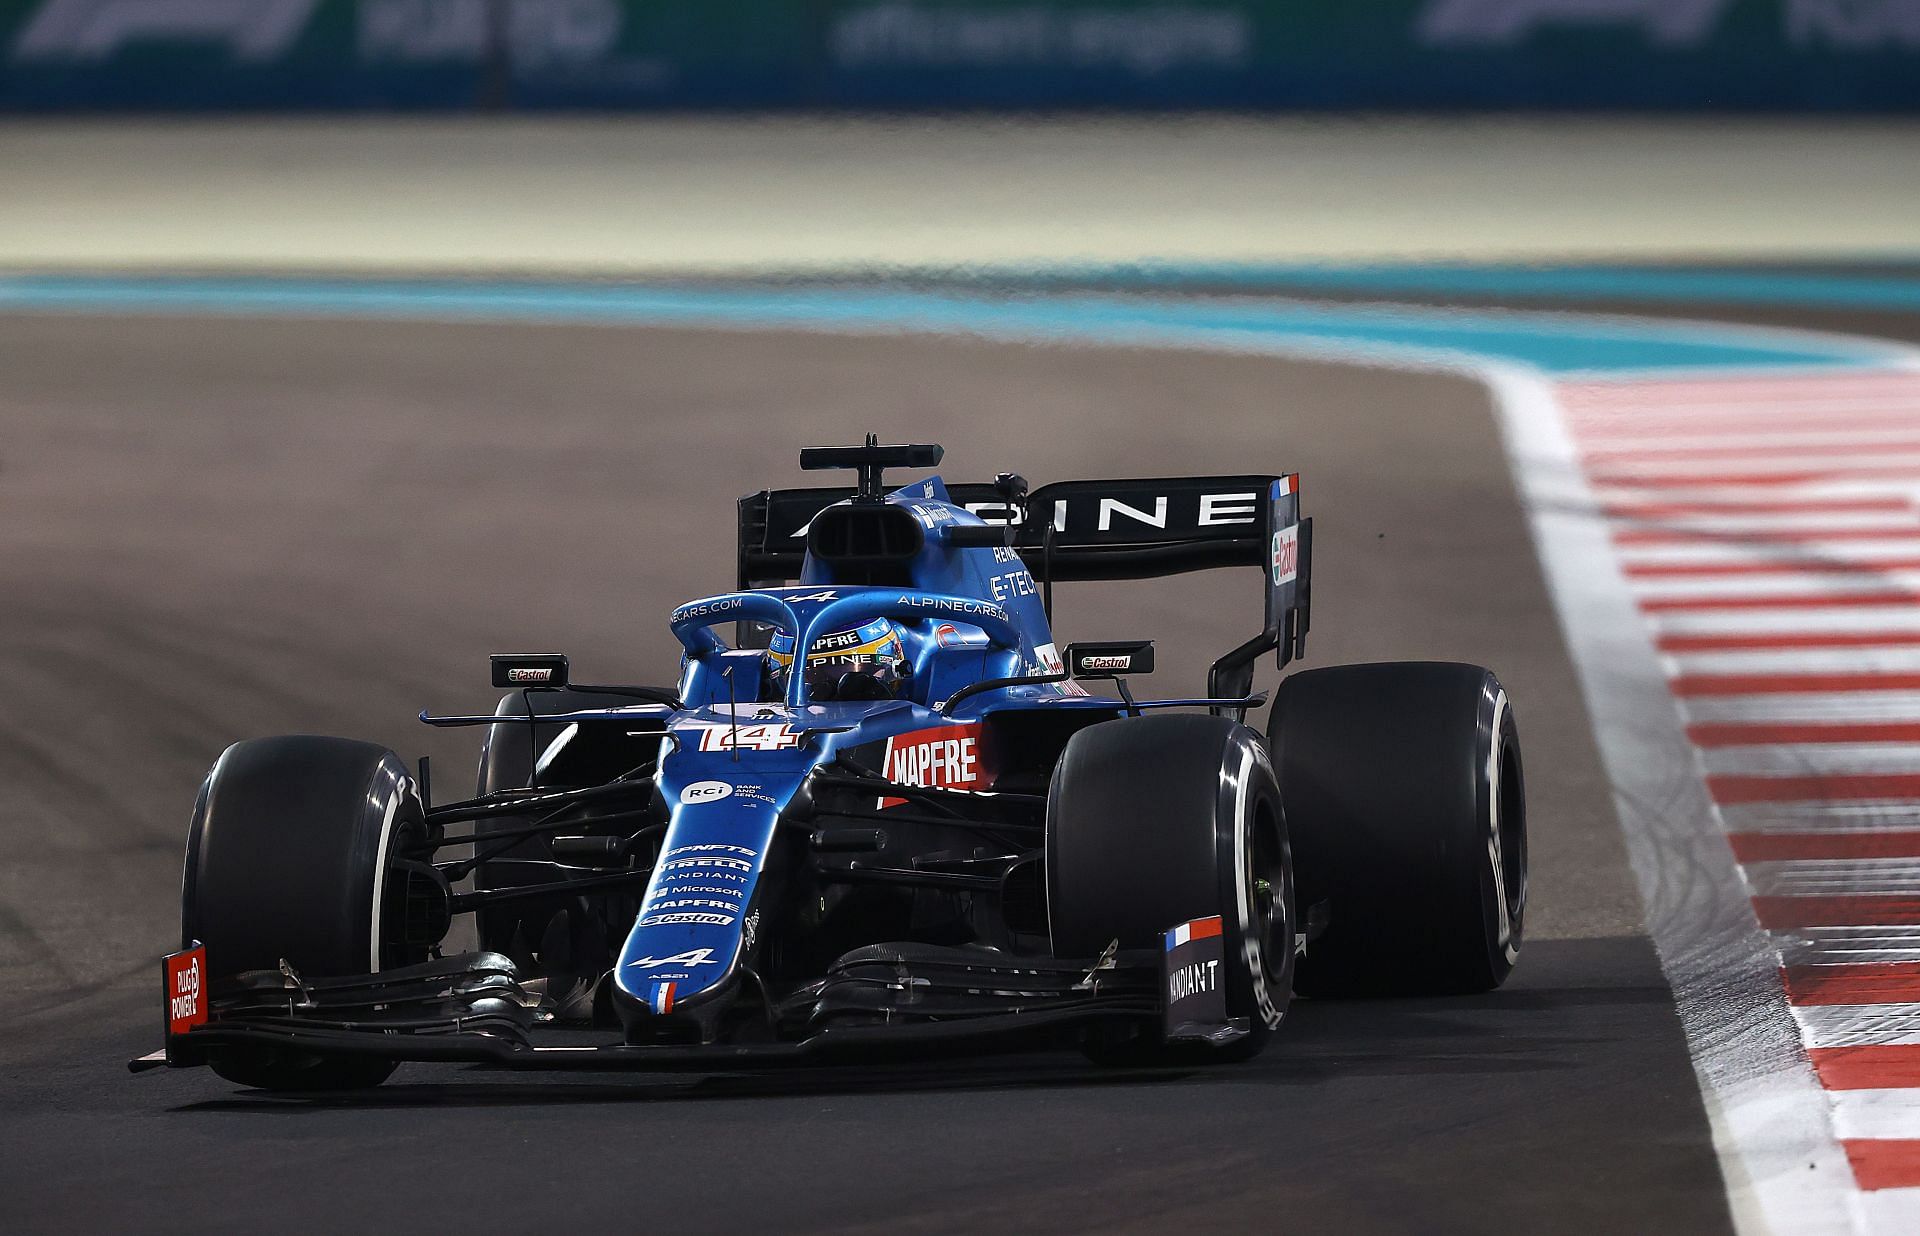 F1 Grand Prix of Abu Dhabi - Fernando Alonso during the main race on Sunday.